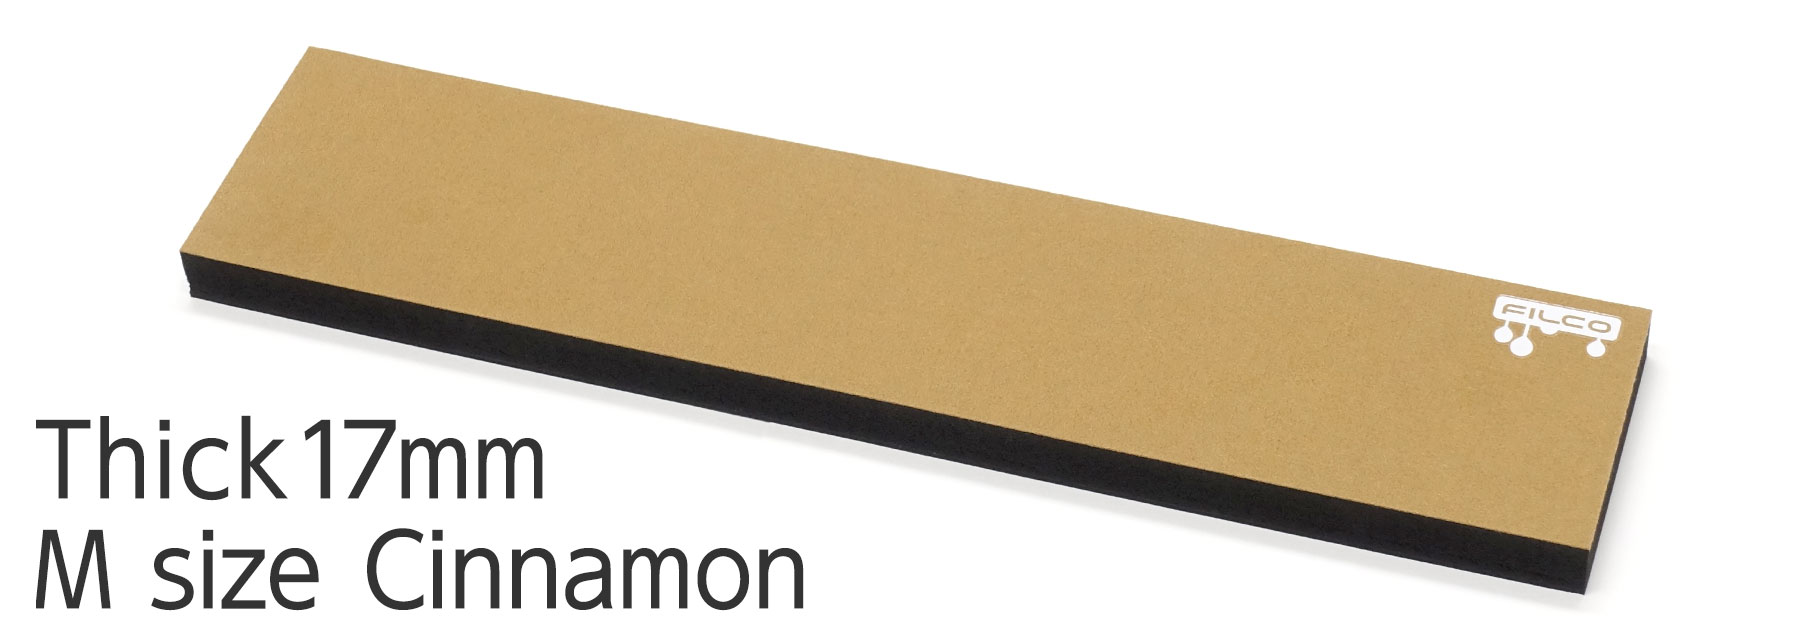 FILCO Majestouch Wrist Rest "Macaron" Thick 17mm / M size / Cinnamon